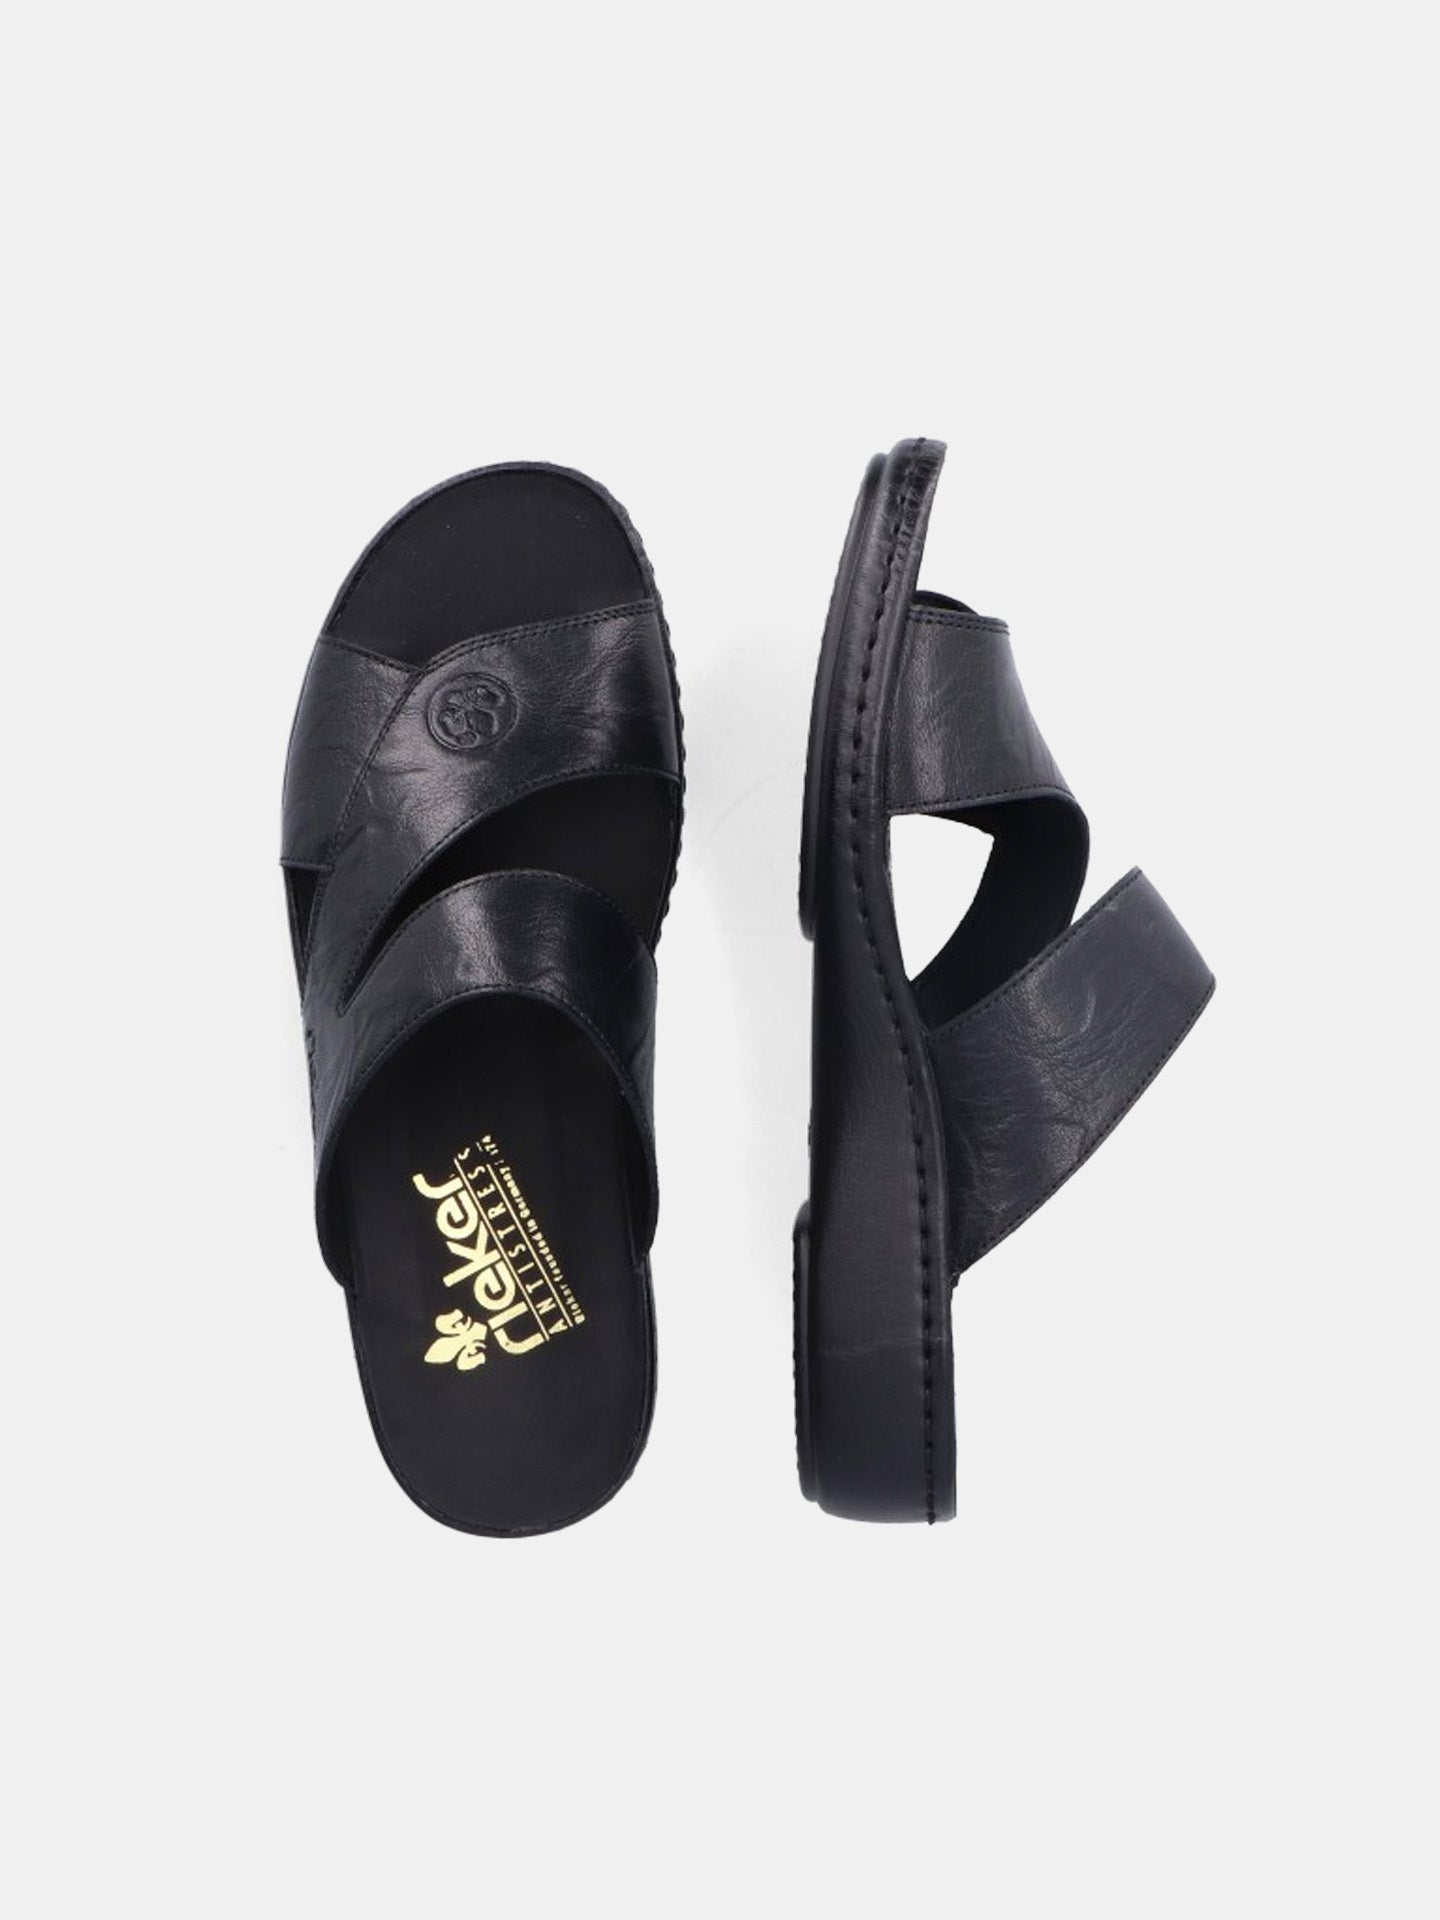 Rieker 23974-02 Men's Slider Sandals